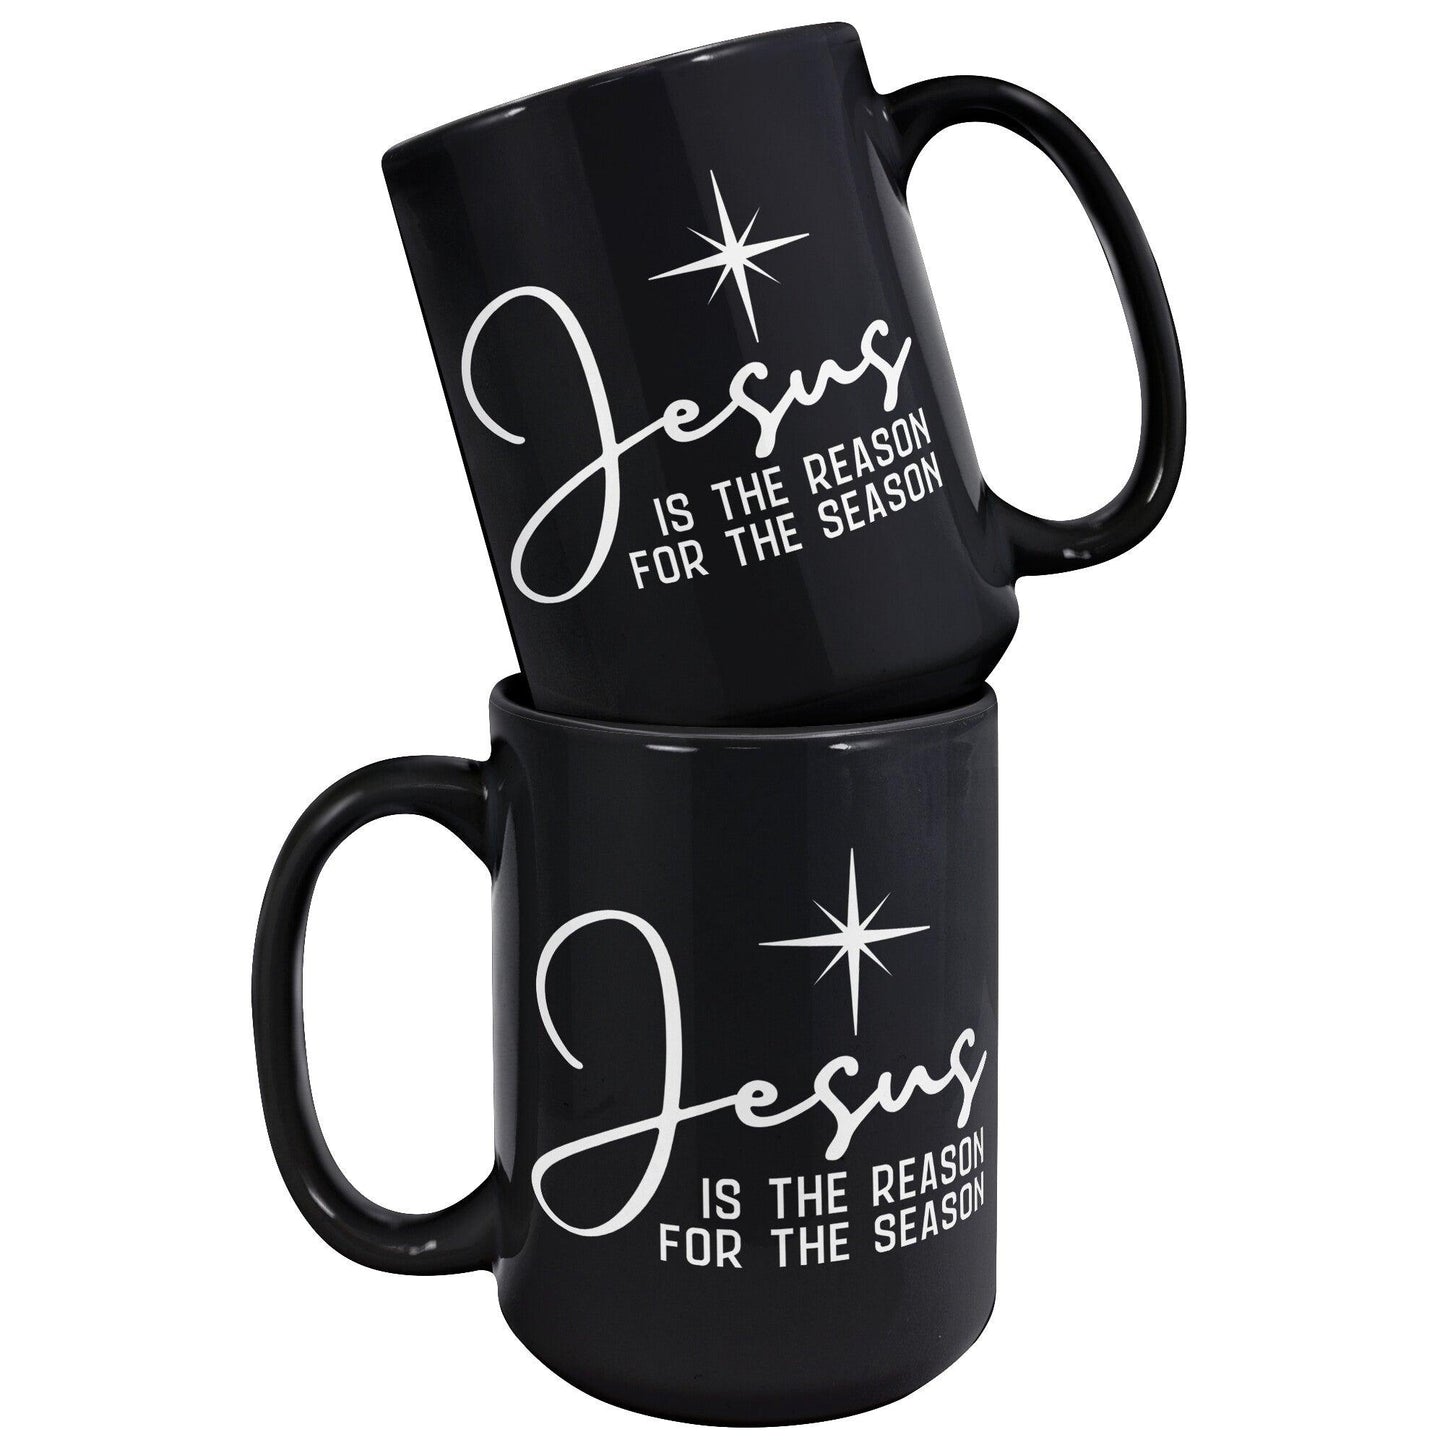 Jesus Is The Reason For The Season Black Mug - TheGivenGet